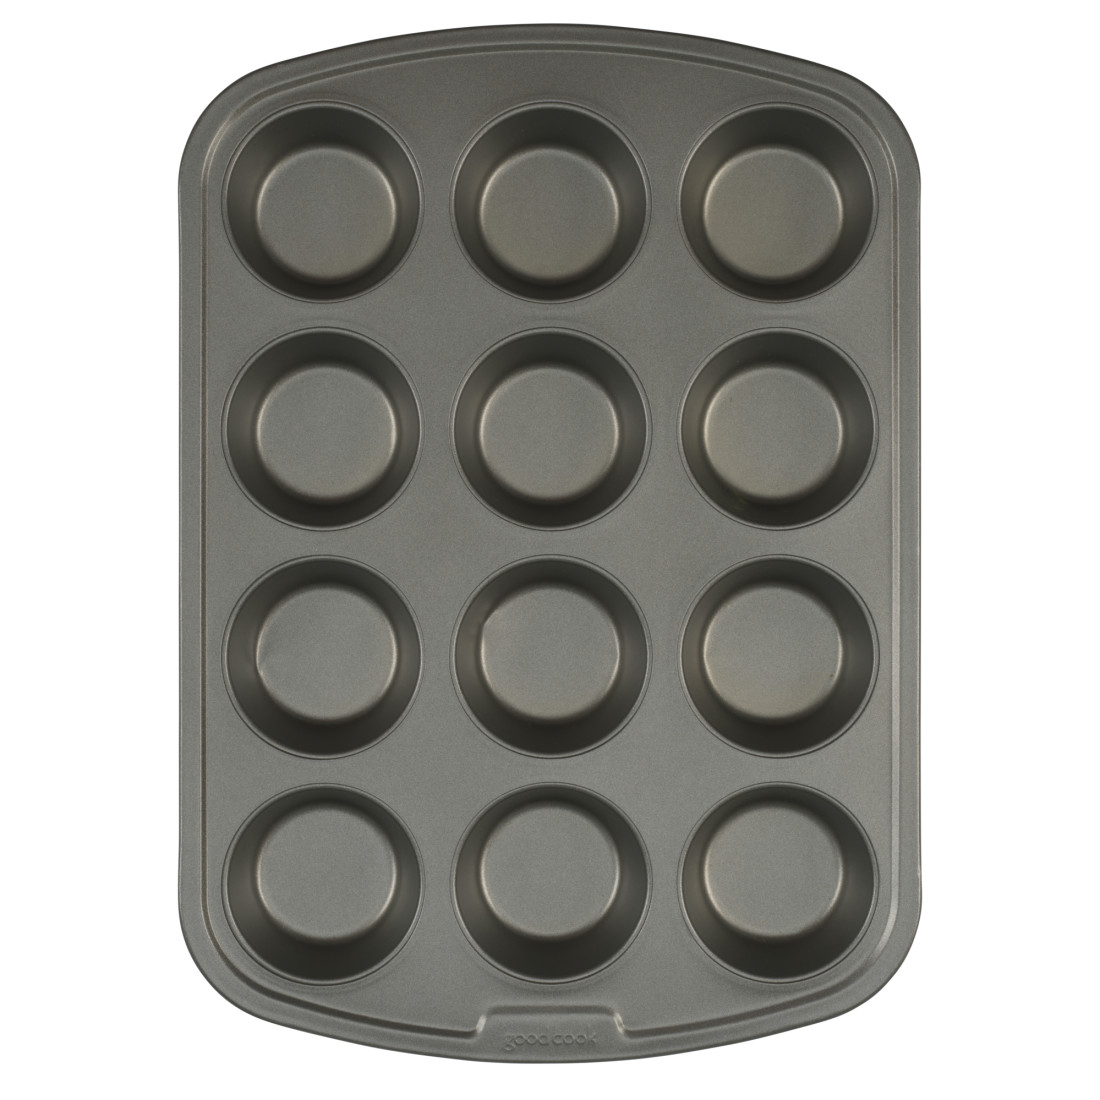 12 Cupcake Holder Non-Stick Carbon Steel Pan - Baketivity